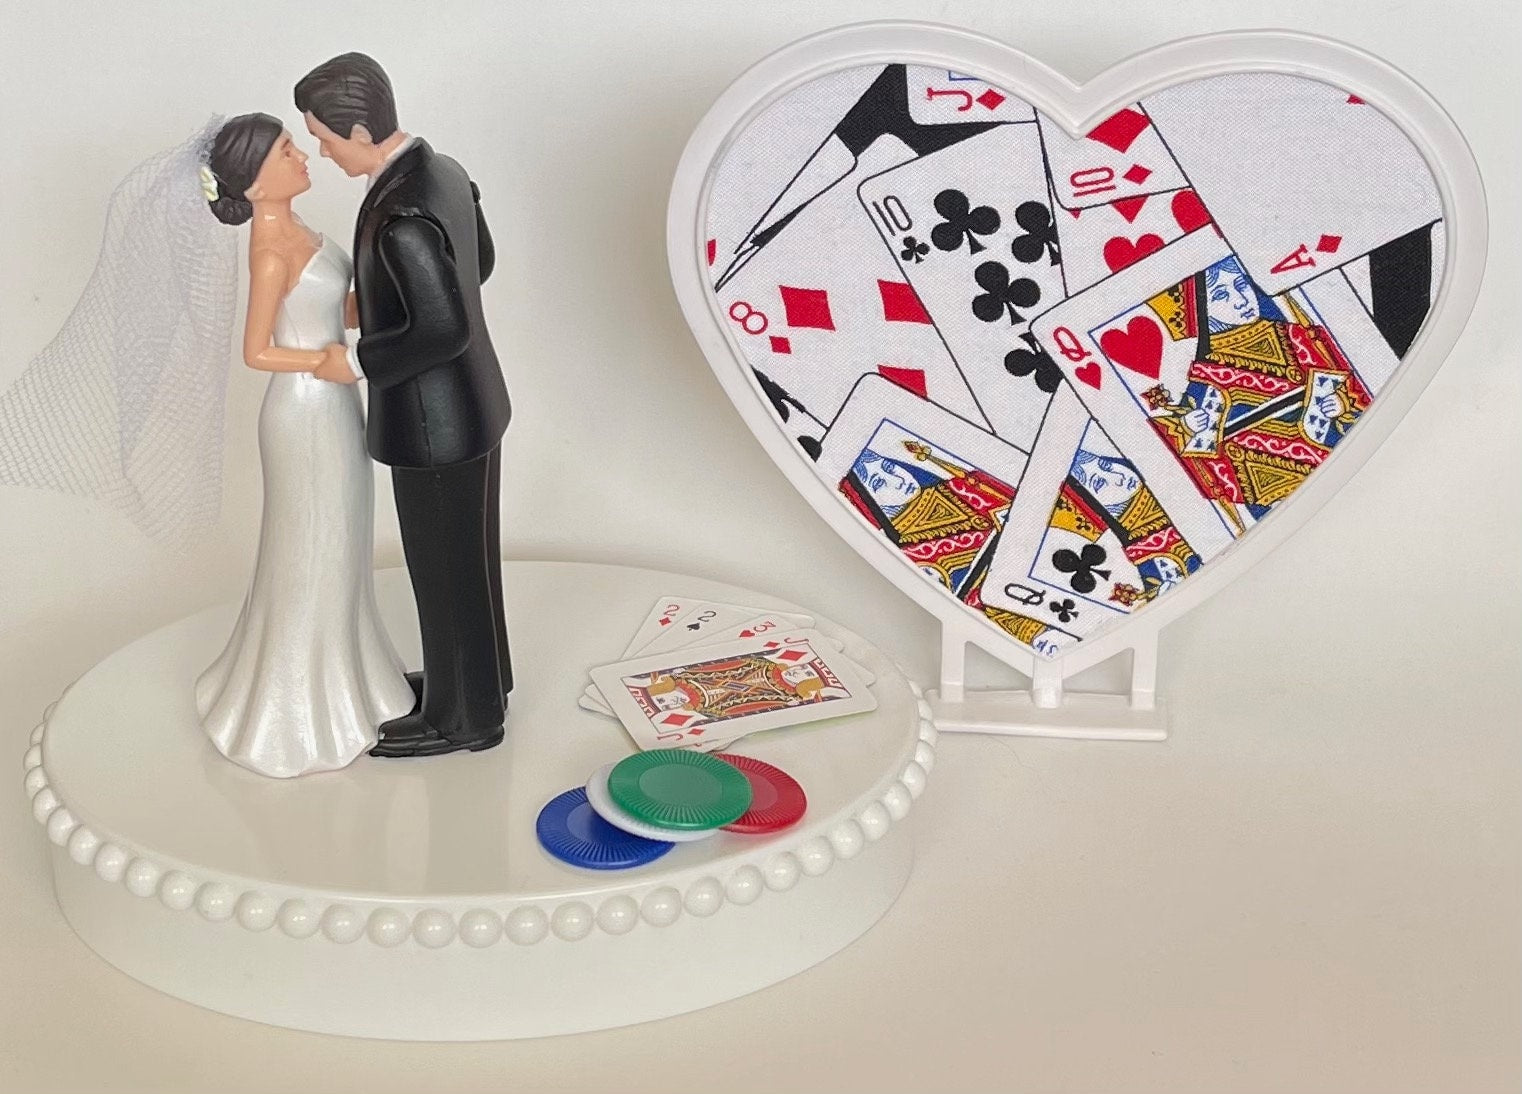 Wedding Cake Topper Playing Cards Themed Blackjack Poker Chips Pretty Short-Haired Bride Groom OOAK Heart Bridal Shower Reception Gift Idea